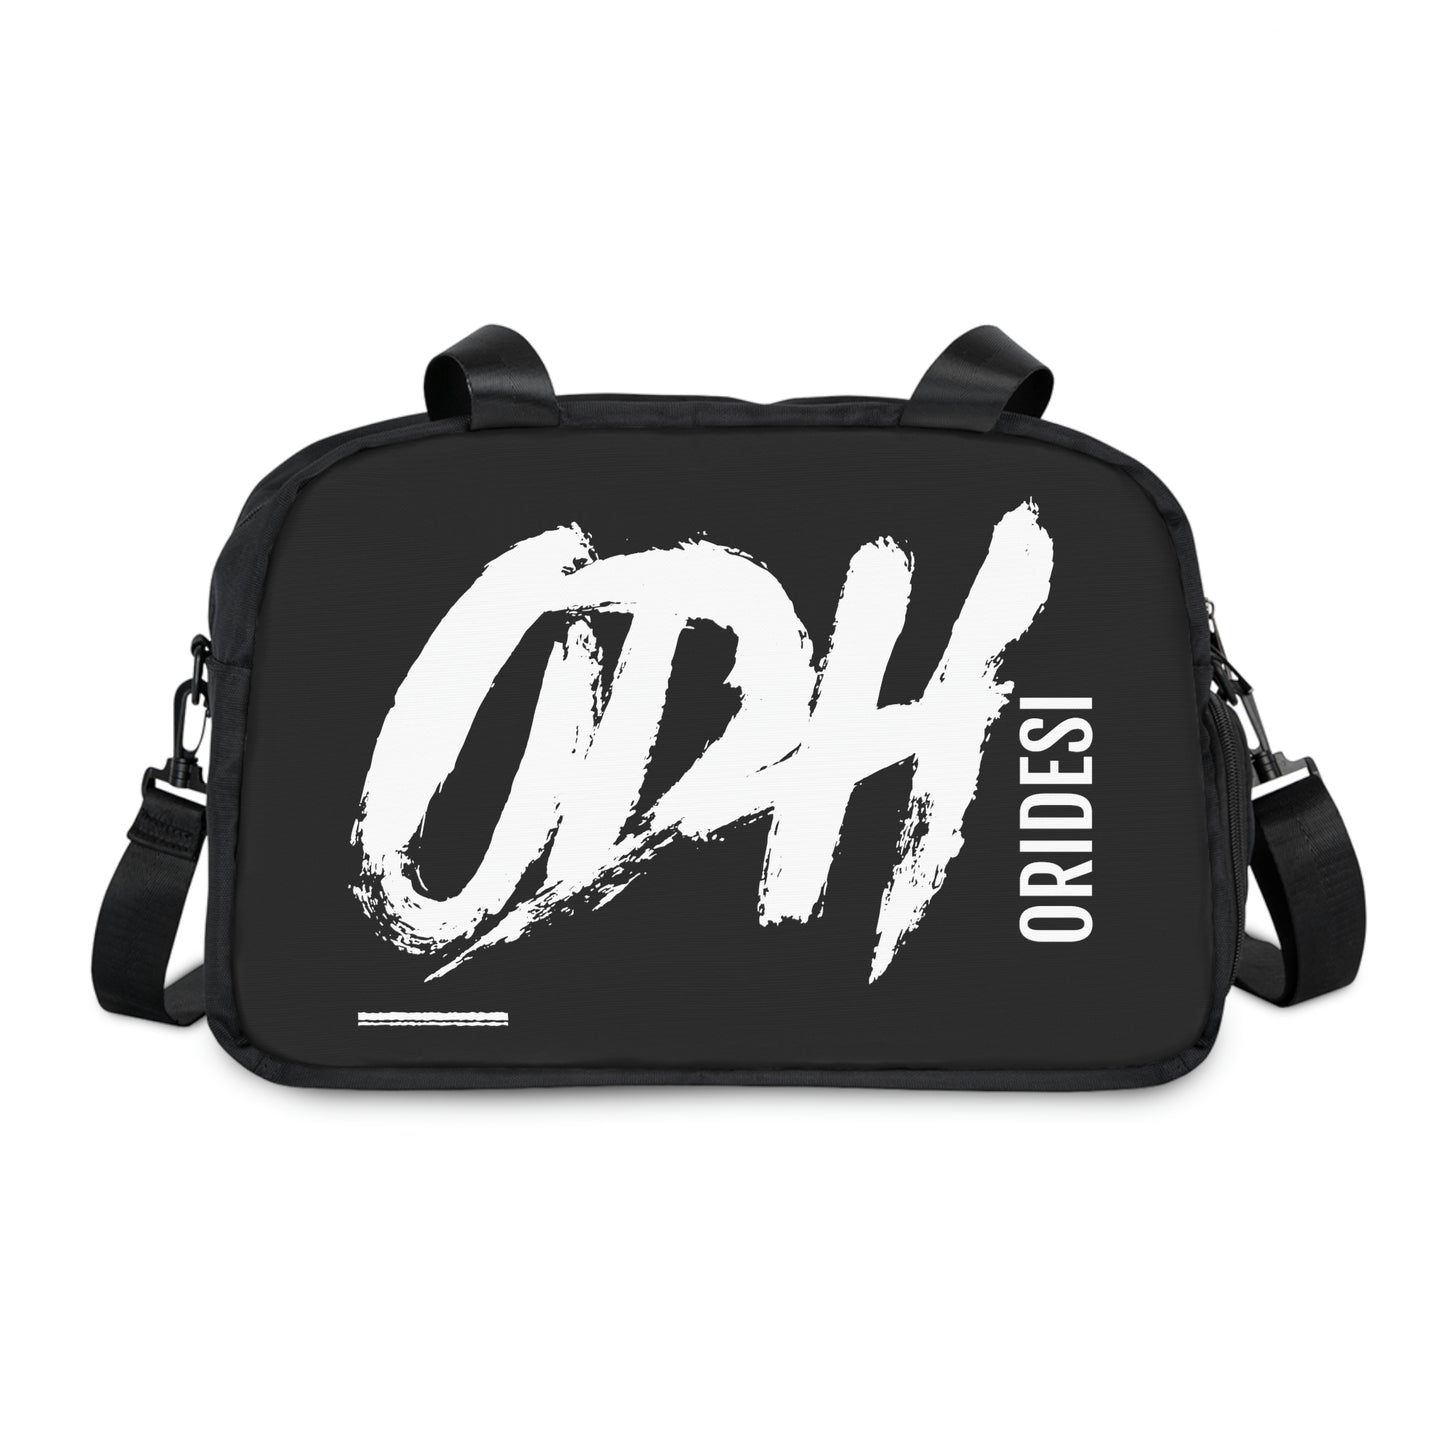 ODH Logo Fitness Gym Bag